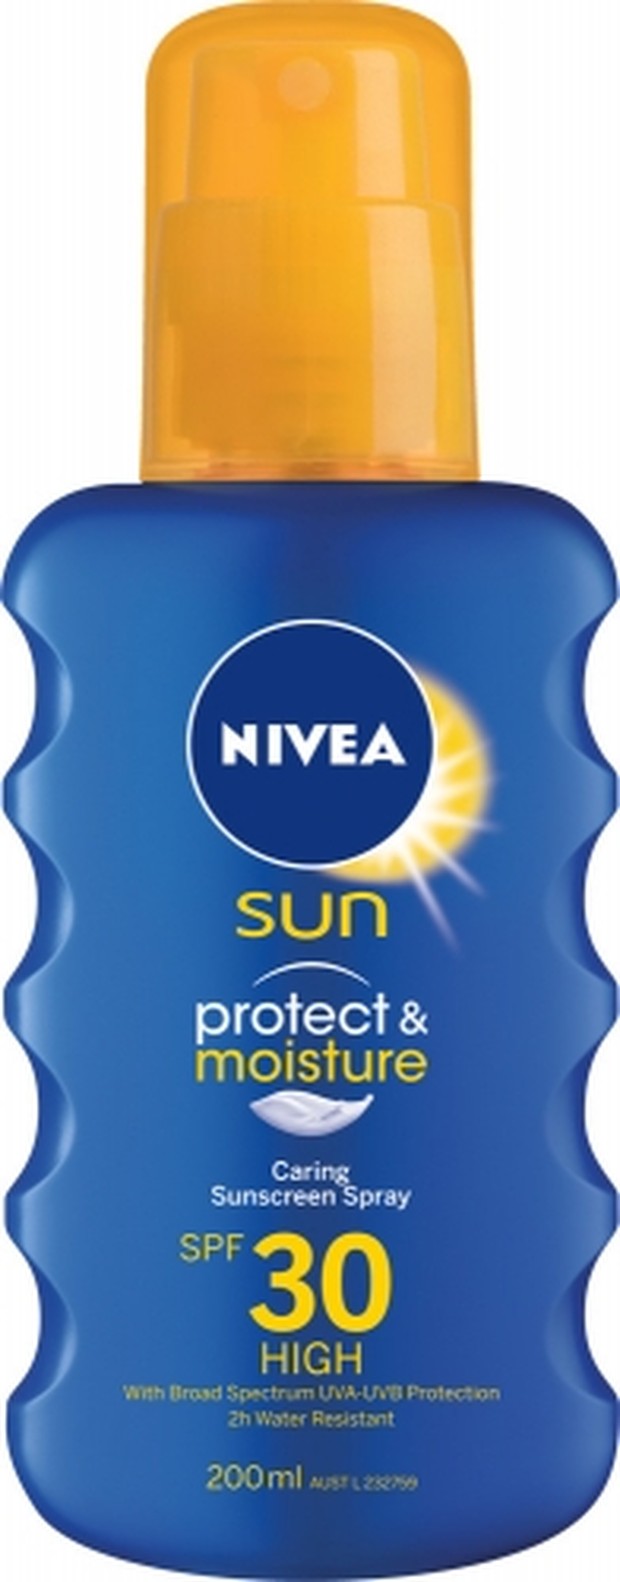 Nivea Sun Protect & Moisture Caring Sunscreen Spay SPF 30 / foto : pharmacydirect.co.nz